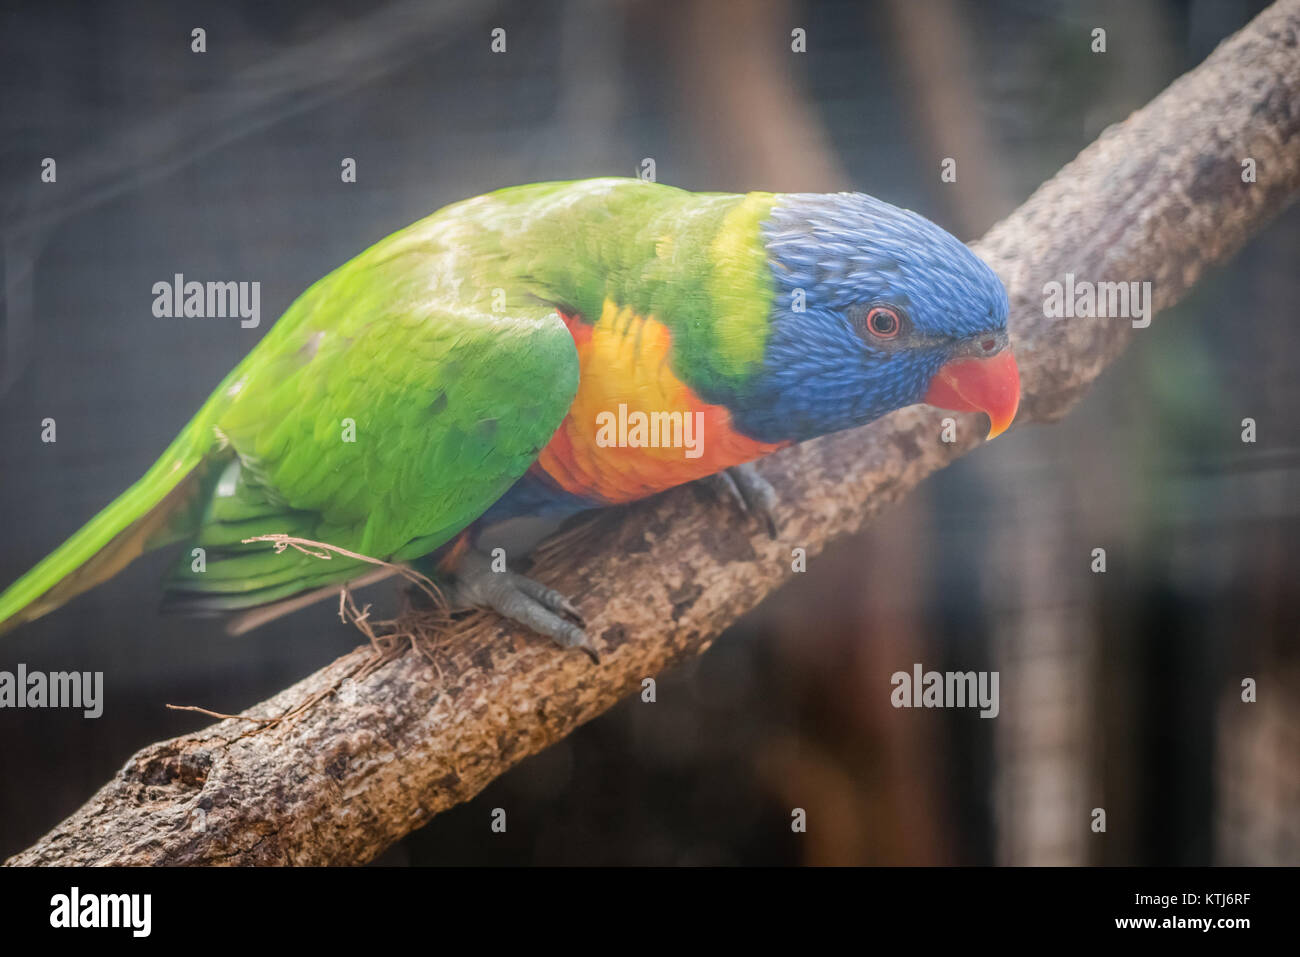 rainbow lorikeet is a species of parrot found in Australia Stock Photo